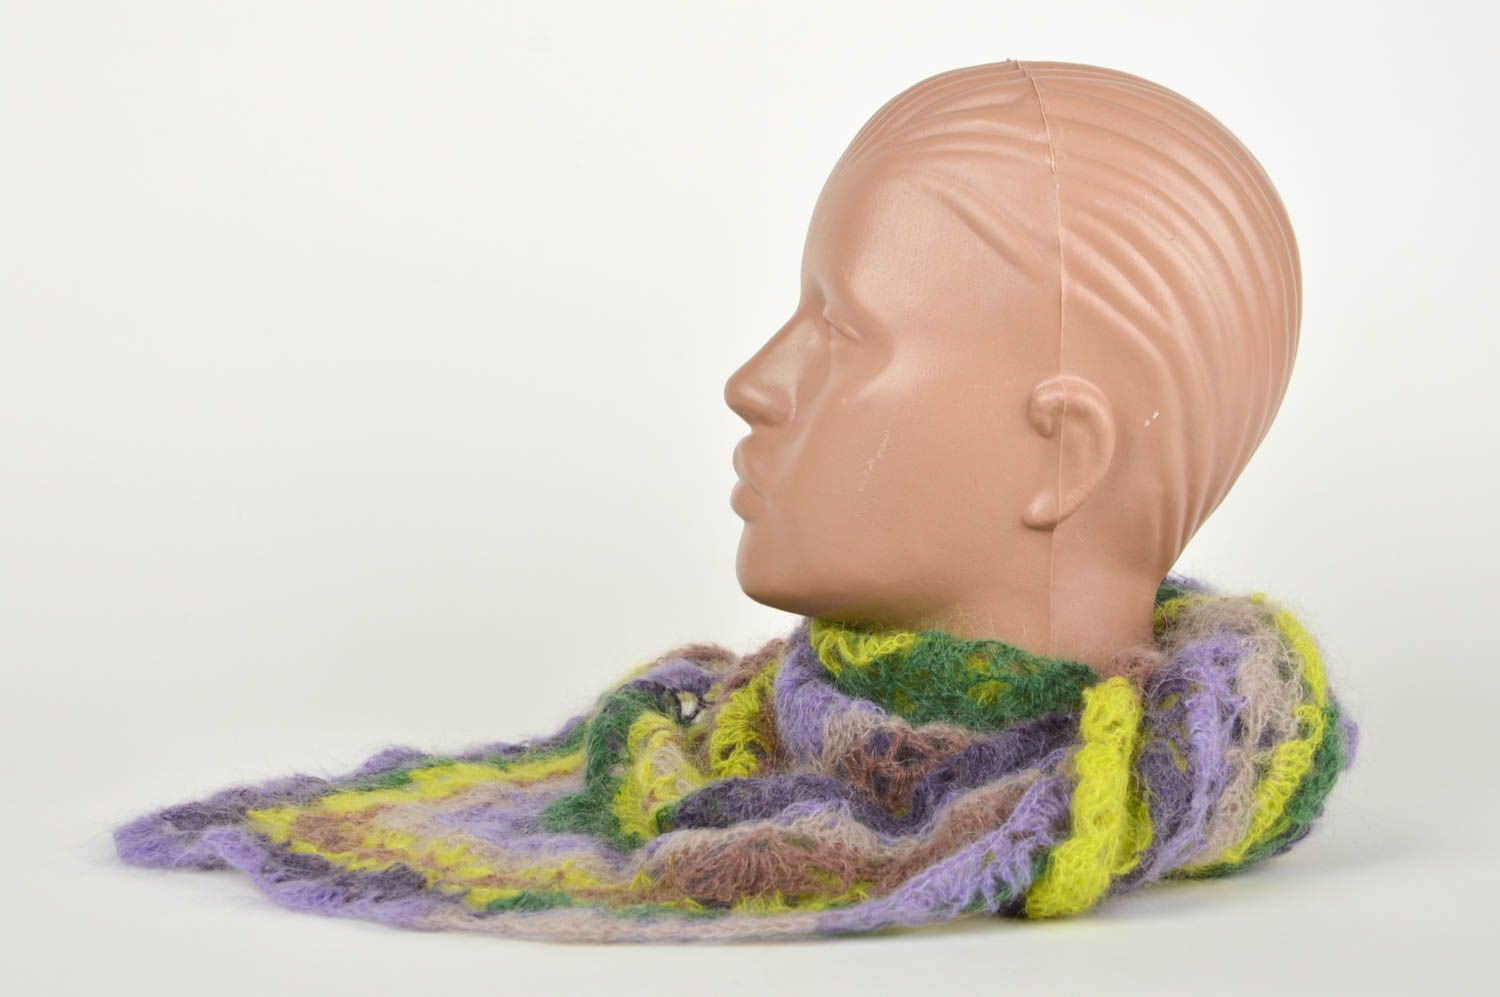 Chal tejido a ganchillo de lana natural accesorio para mujeres regalo original foto 3